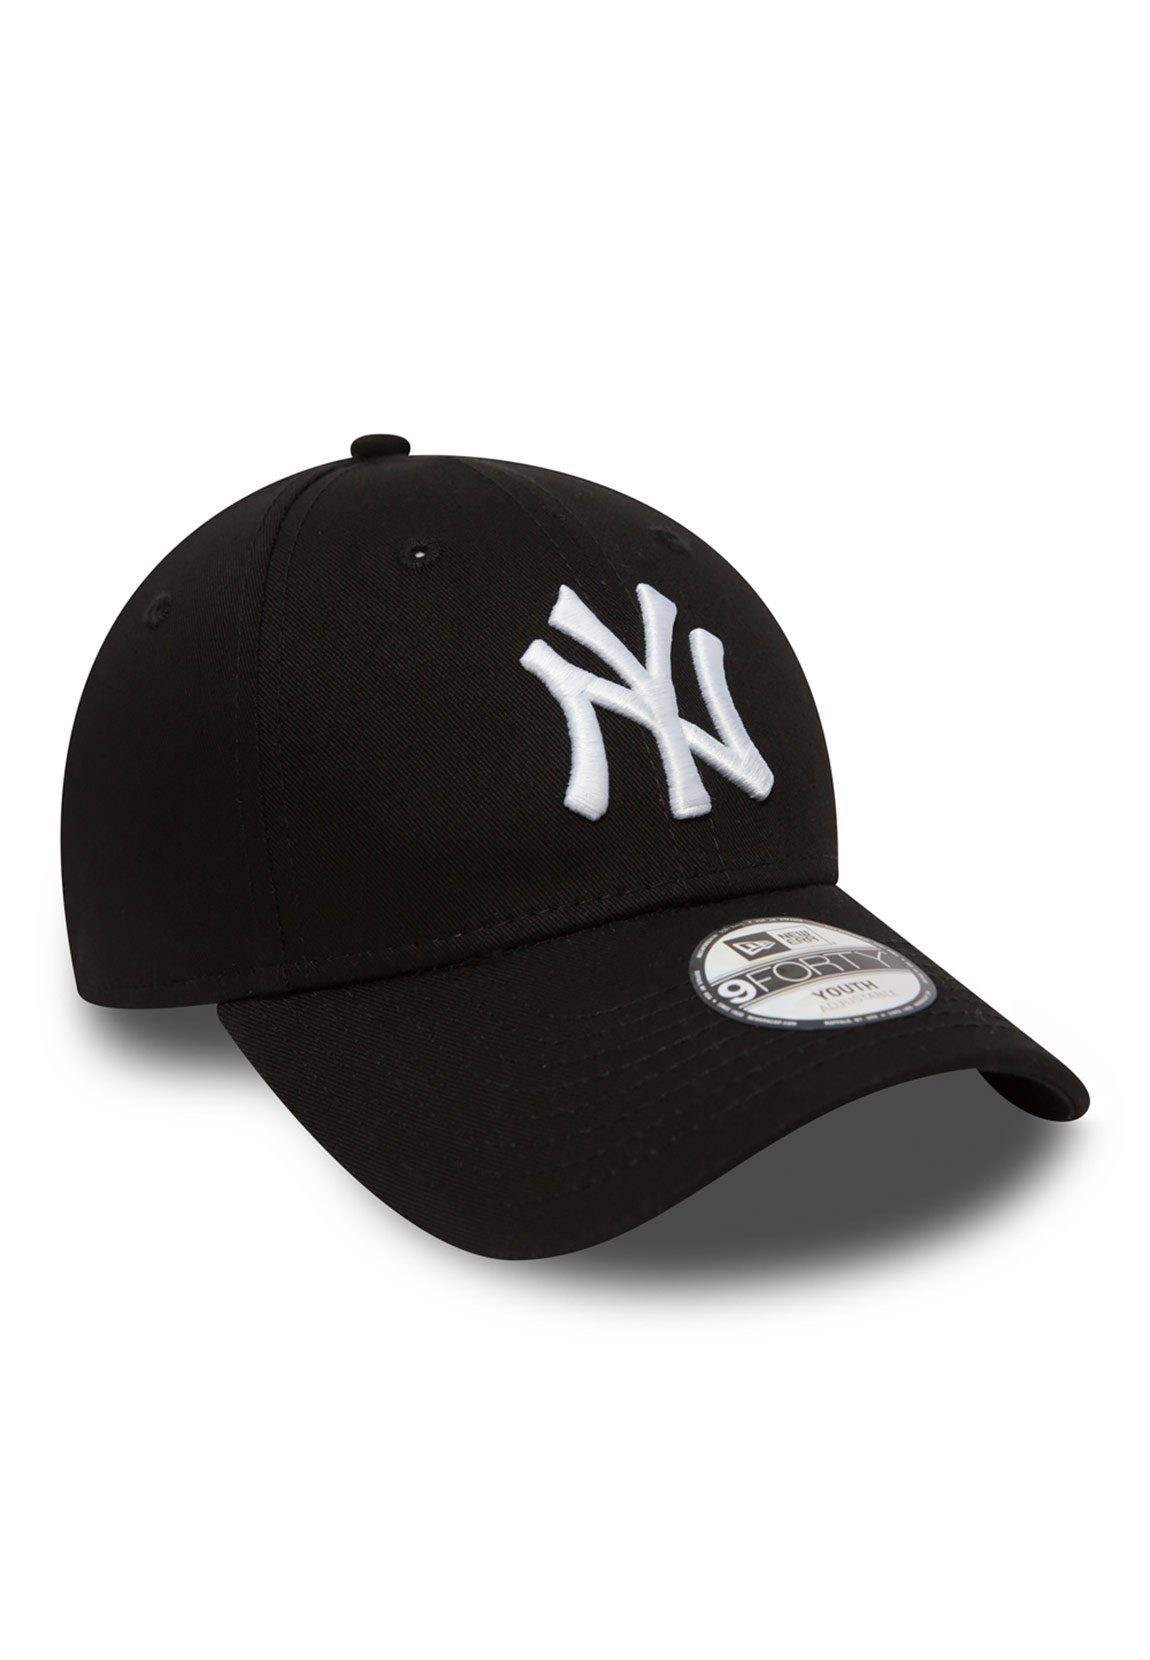 NY - - Era New Black-White Era Kids Adjustables Schwarz/Weiß New Baseball Cap YANKEES Cap